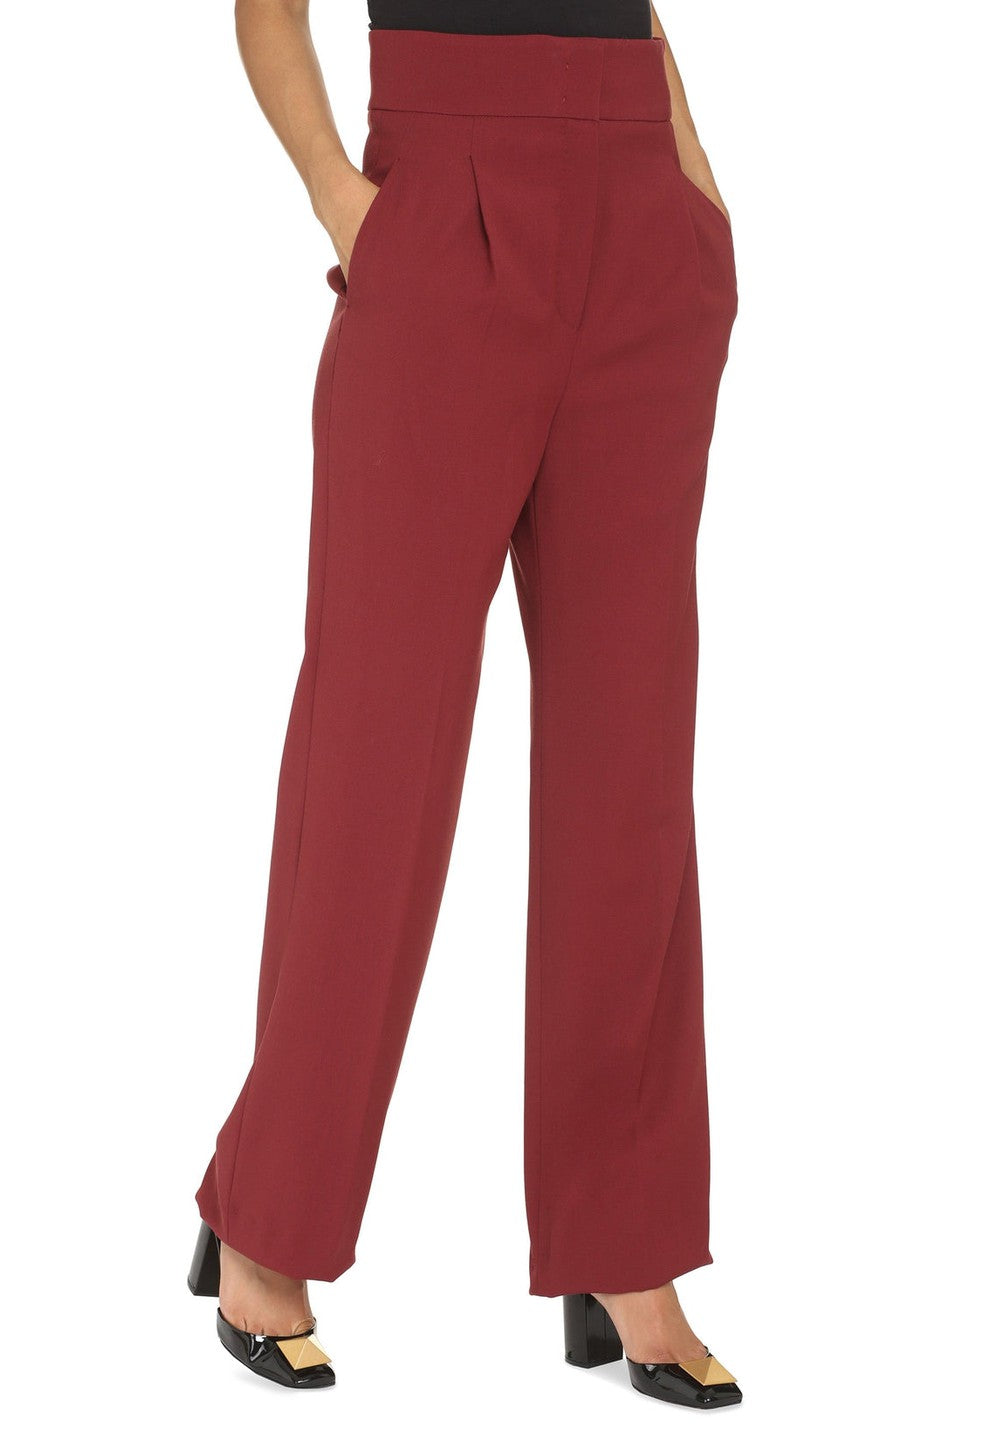 Malia-high-waist-crepe-trousers-Max-Mara-Studio-designer-outlet-archivist-3_18595934-787a-4dff-bb7d-3510d402ac32.jpg